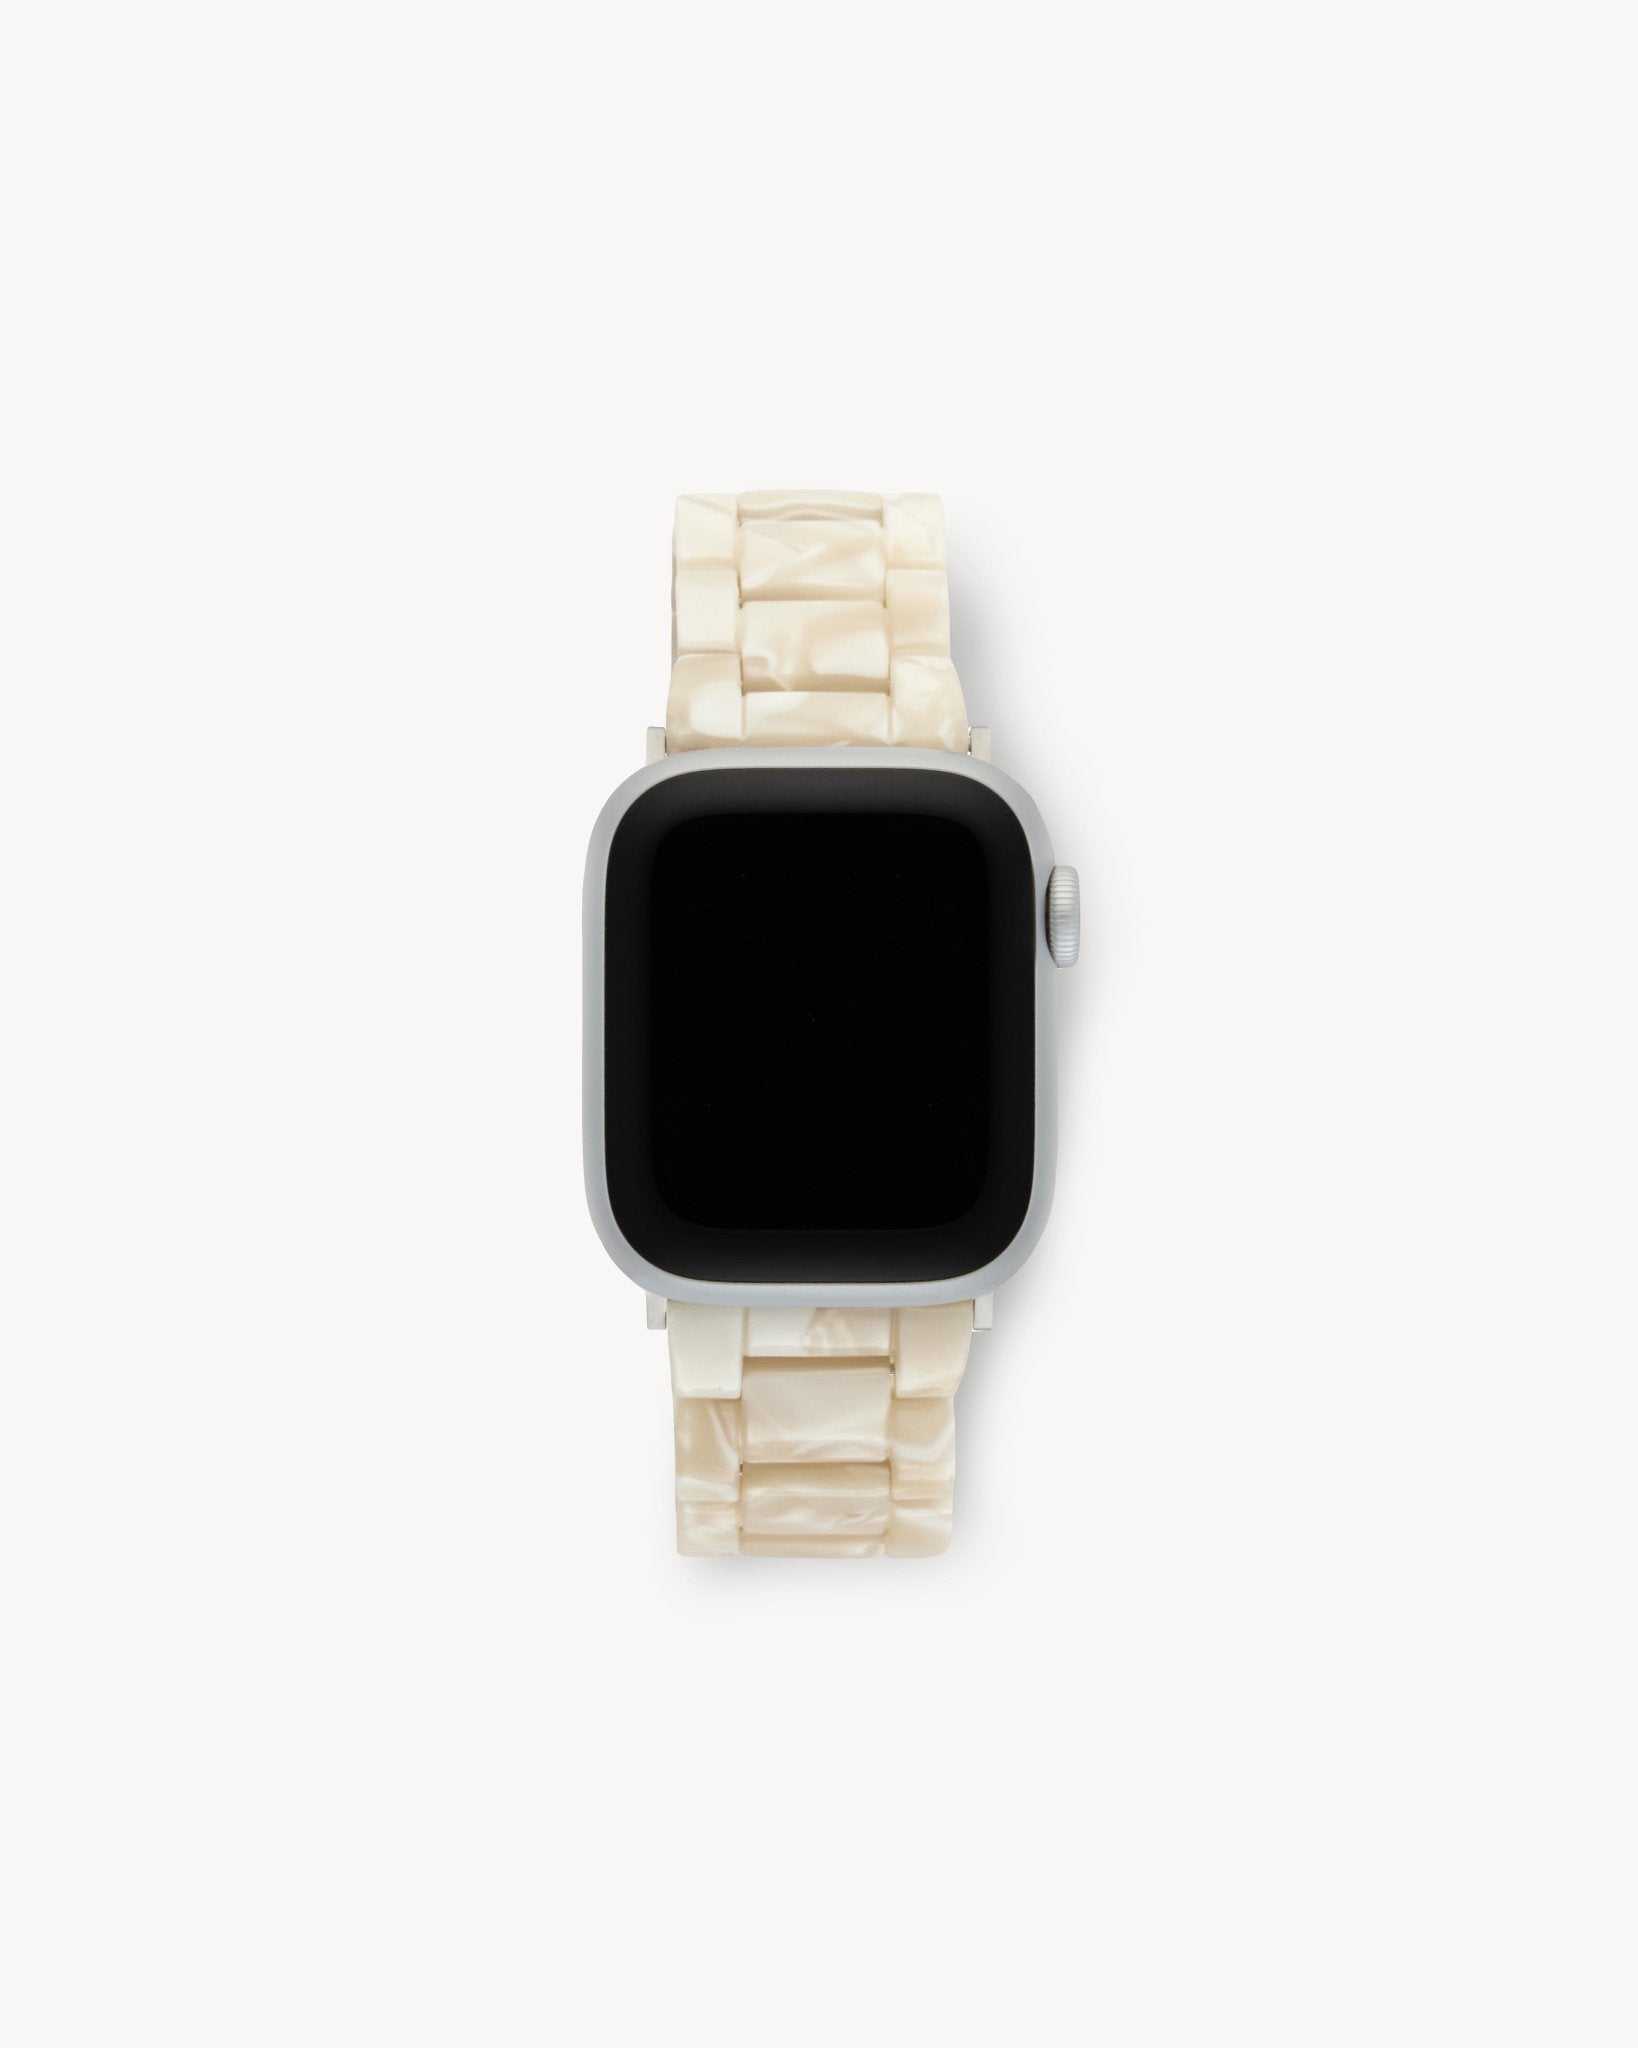 MACHETE Apple Watch Band in Ivory